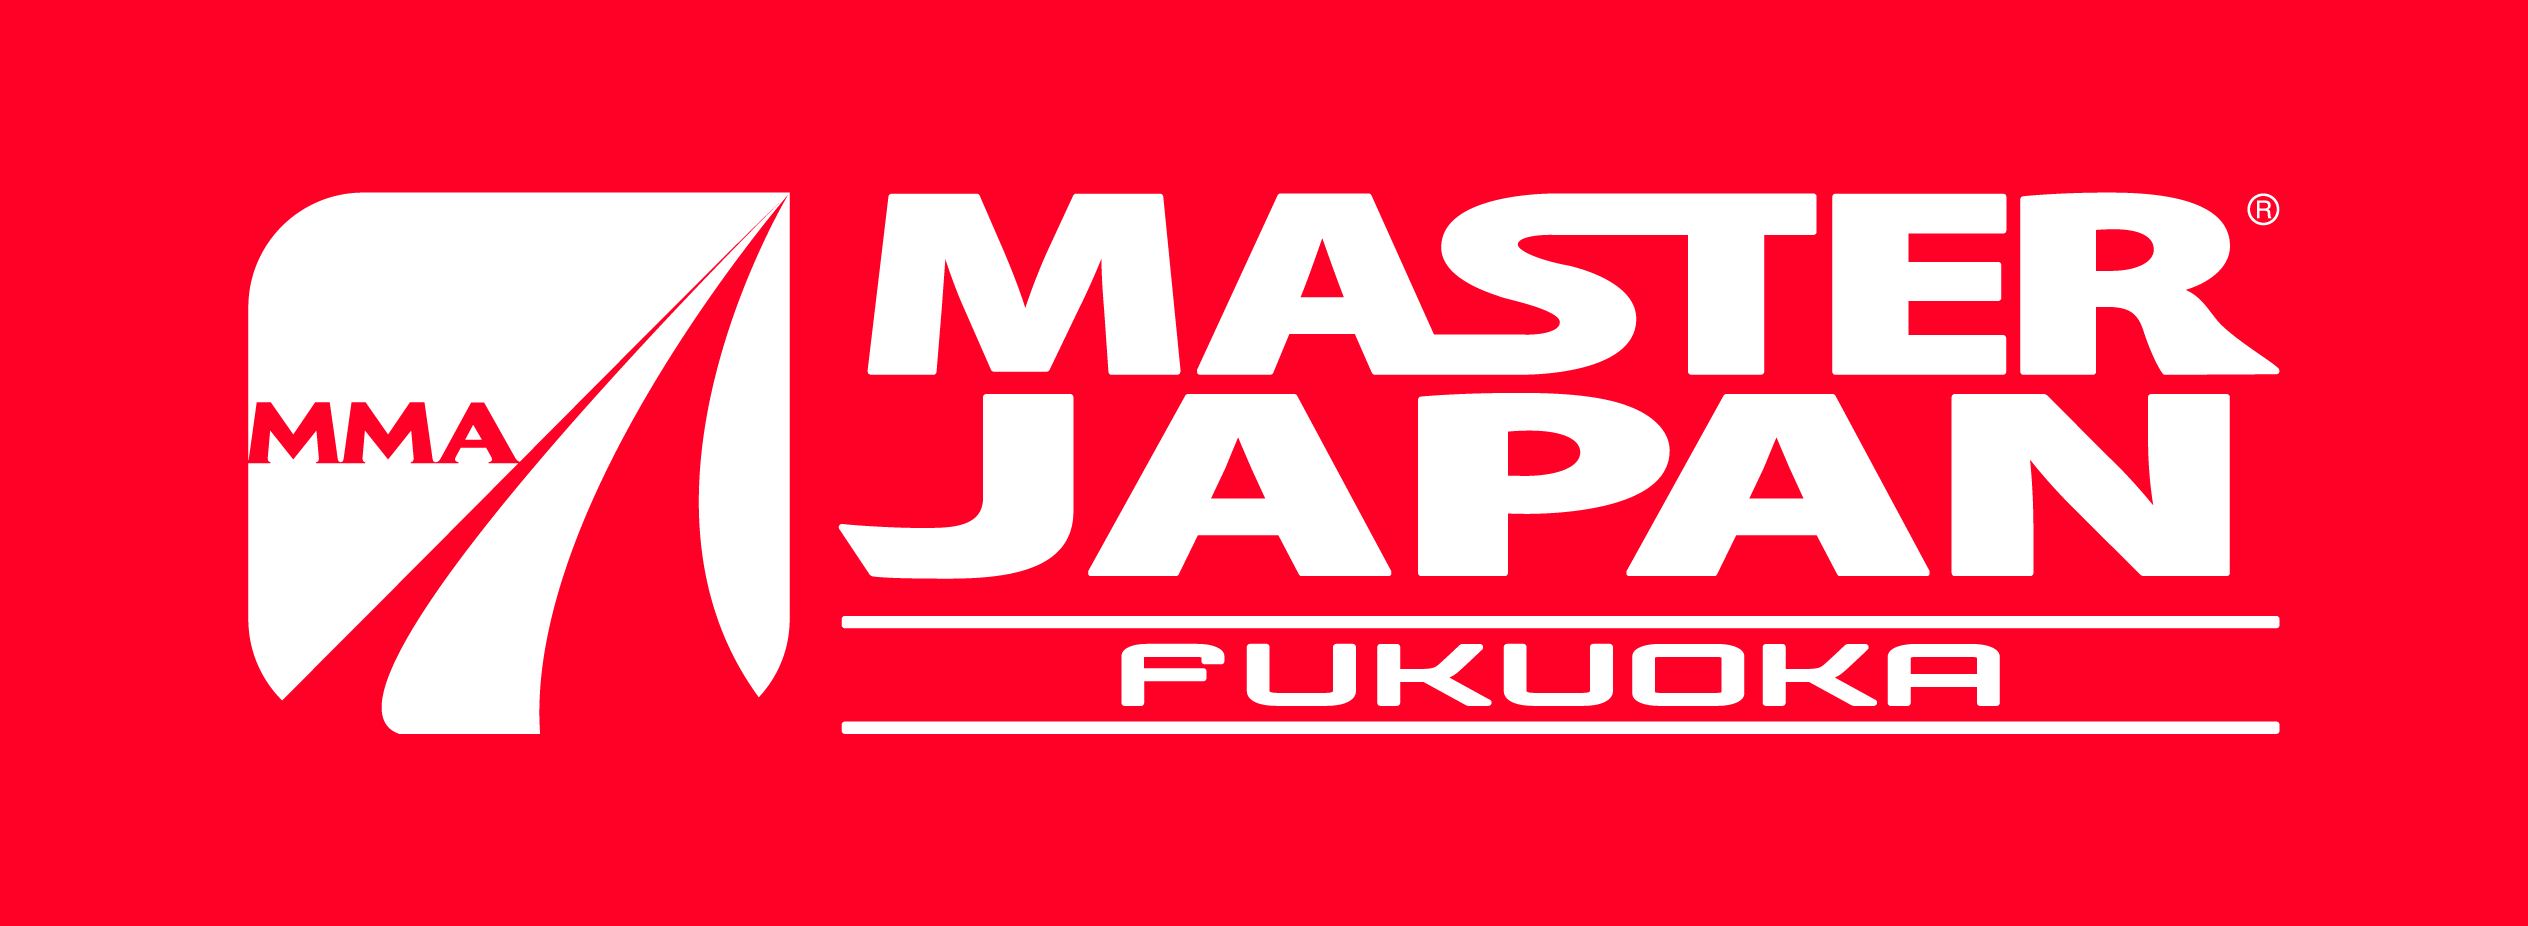 MASTER JAPAN FUKUOKA